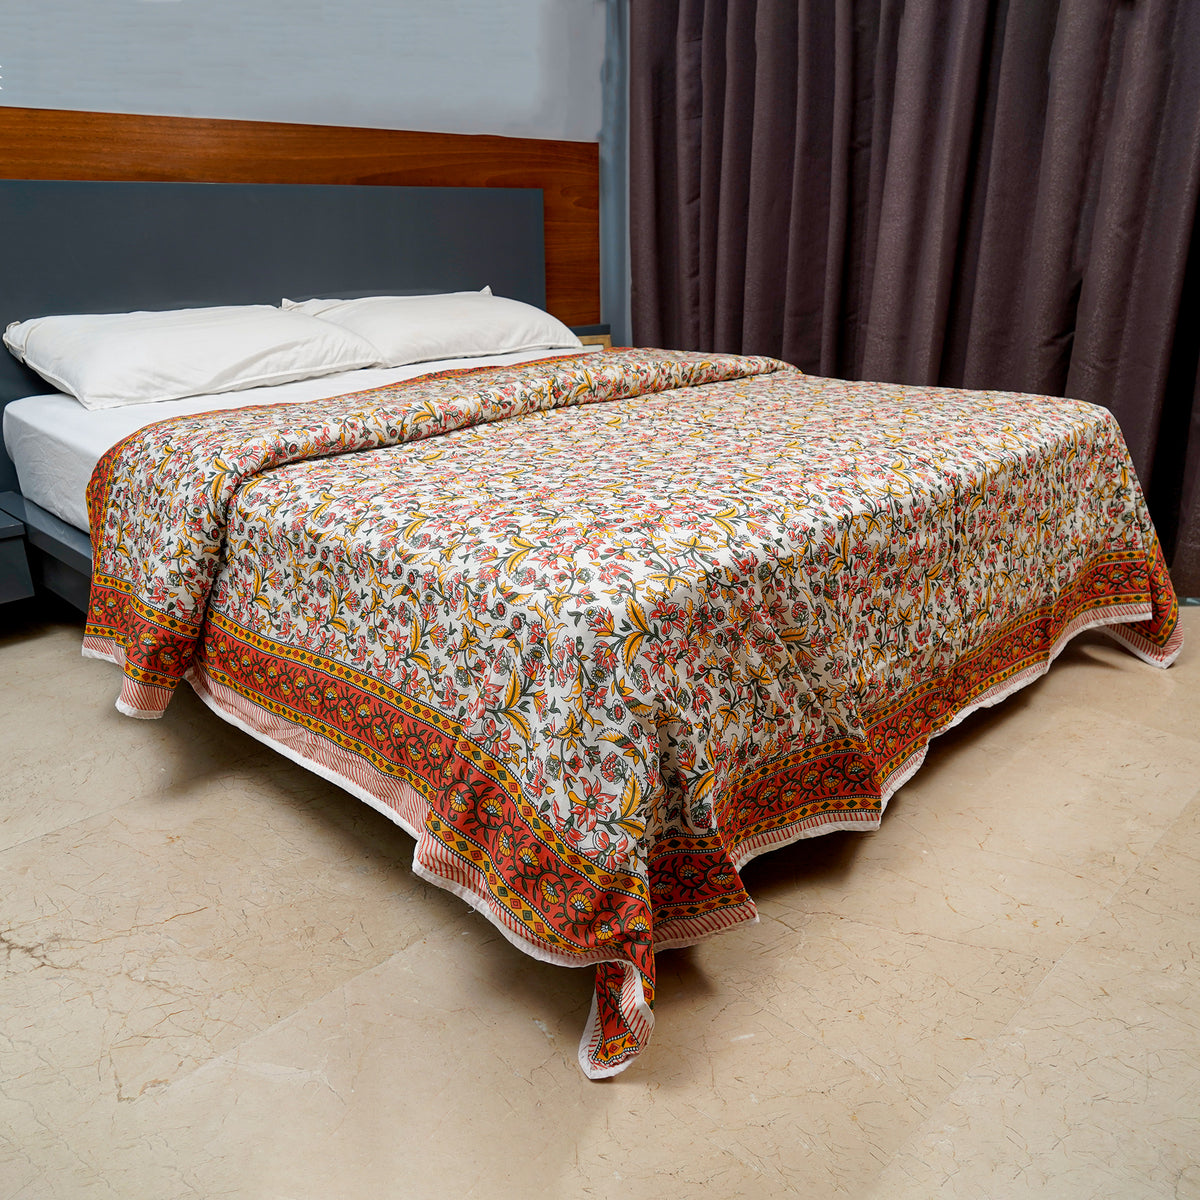 Inizio Cotton Lightweight Reversible Double Bed Dohar Jaipuri Floral Printed AC Blanket All Season Duvet Comforter